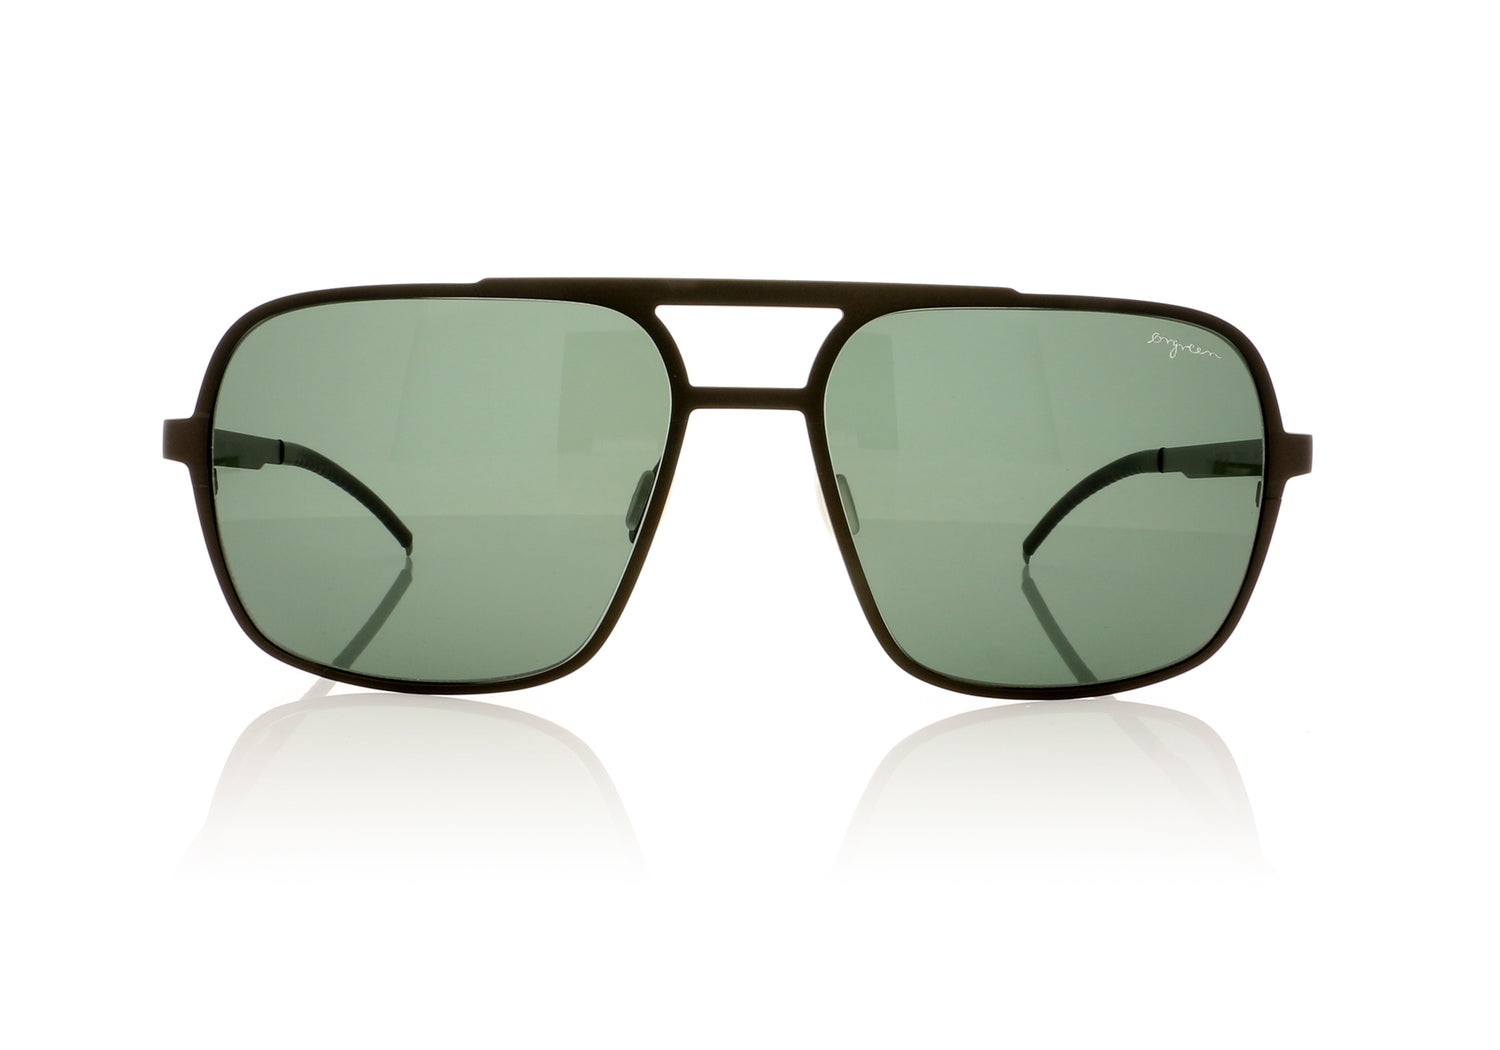 Ørgreen Clint 560 Sandblasted olive brown Sunglasses - Front